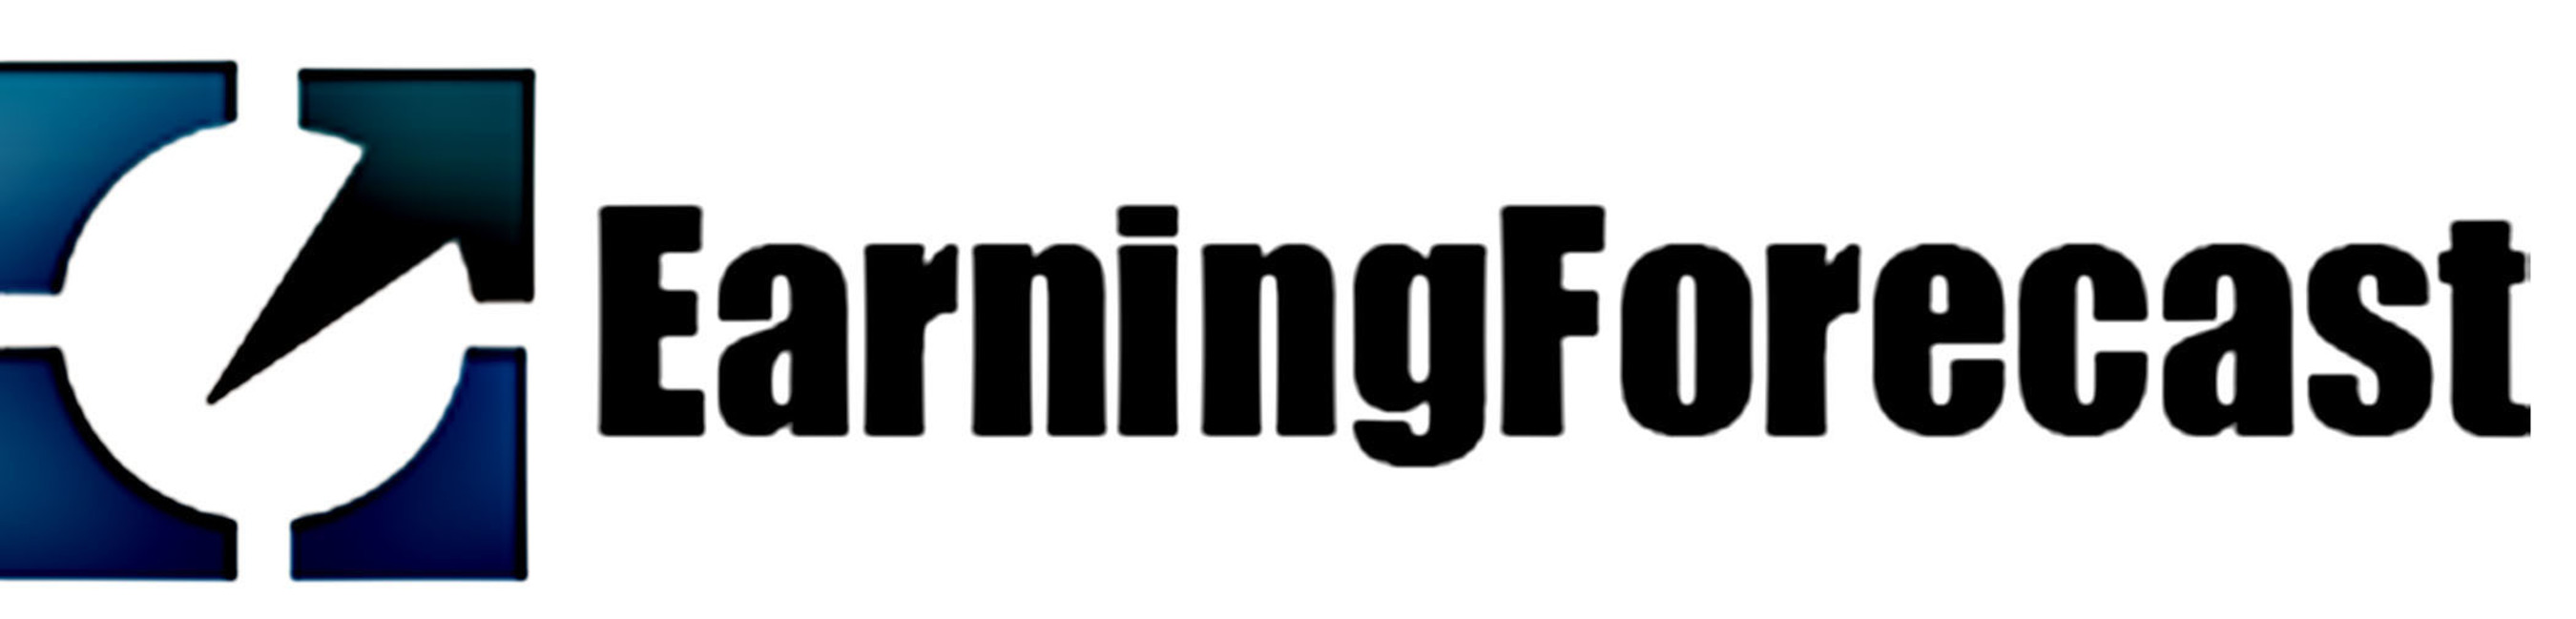 EarningForecast.com logo